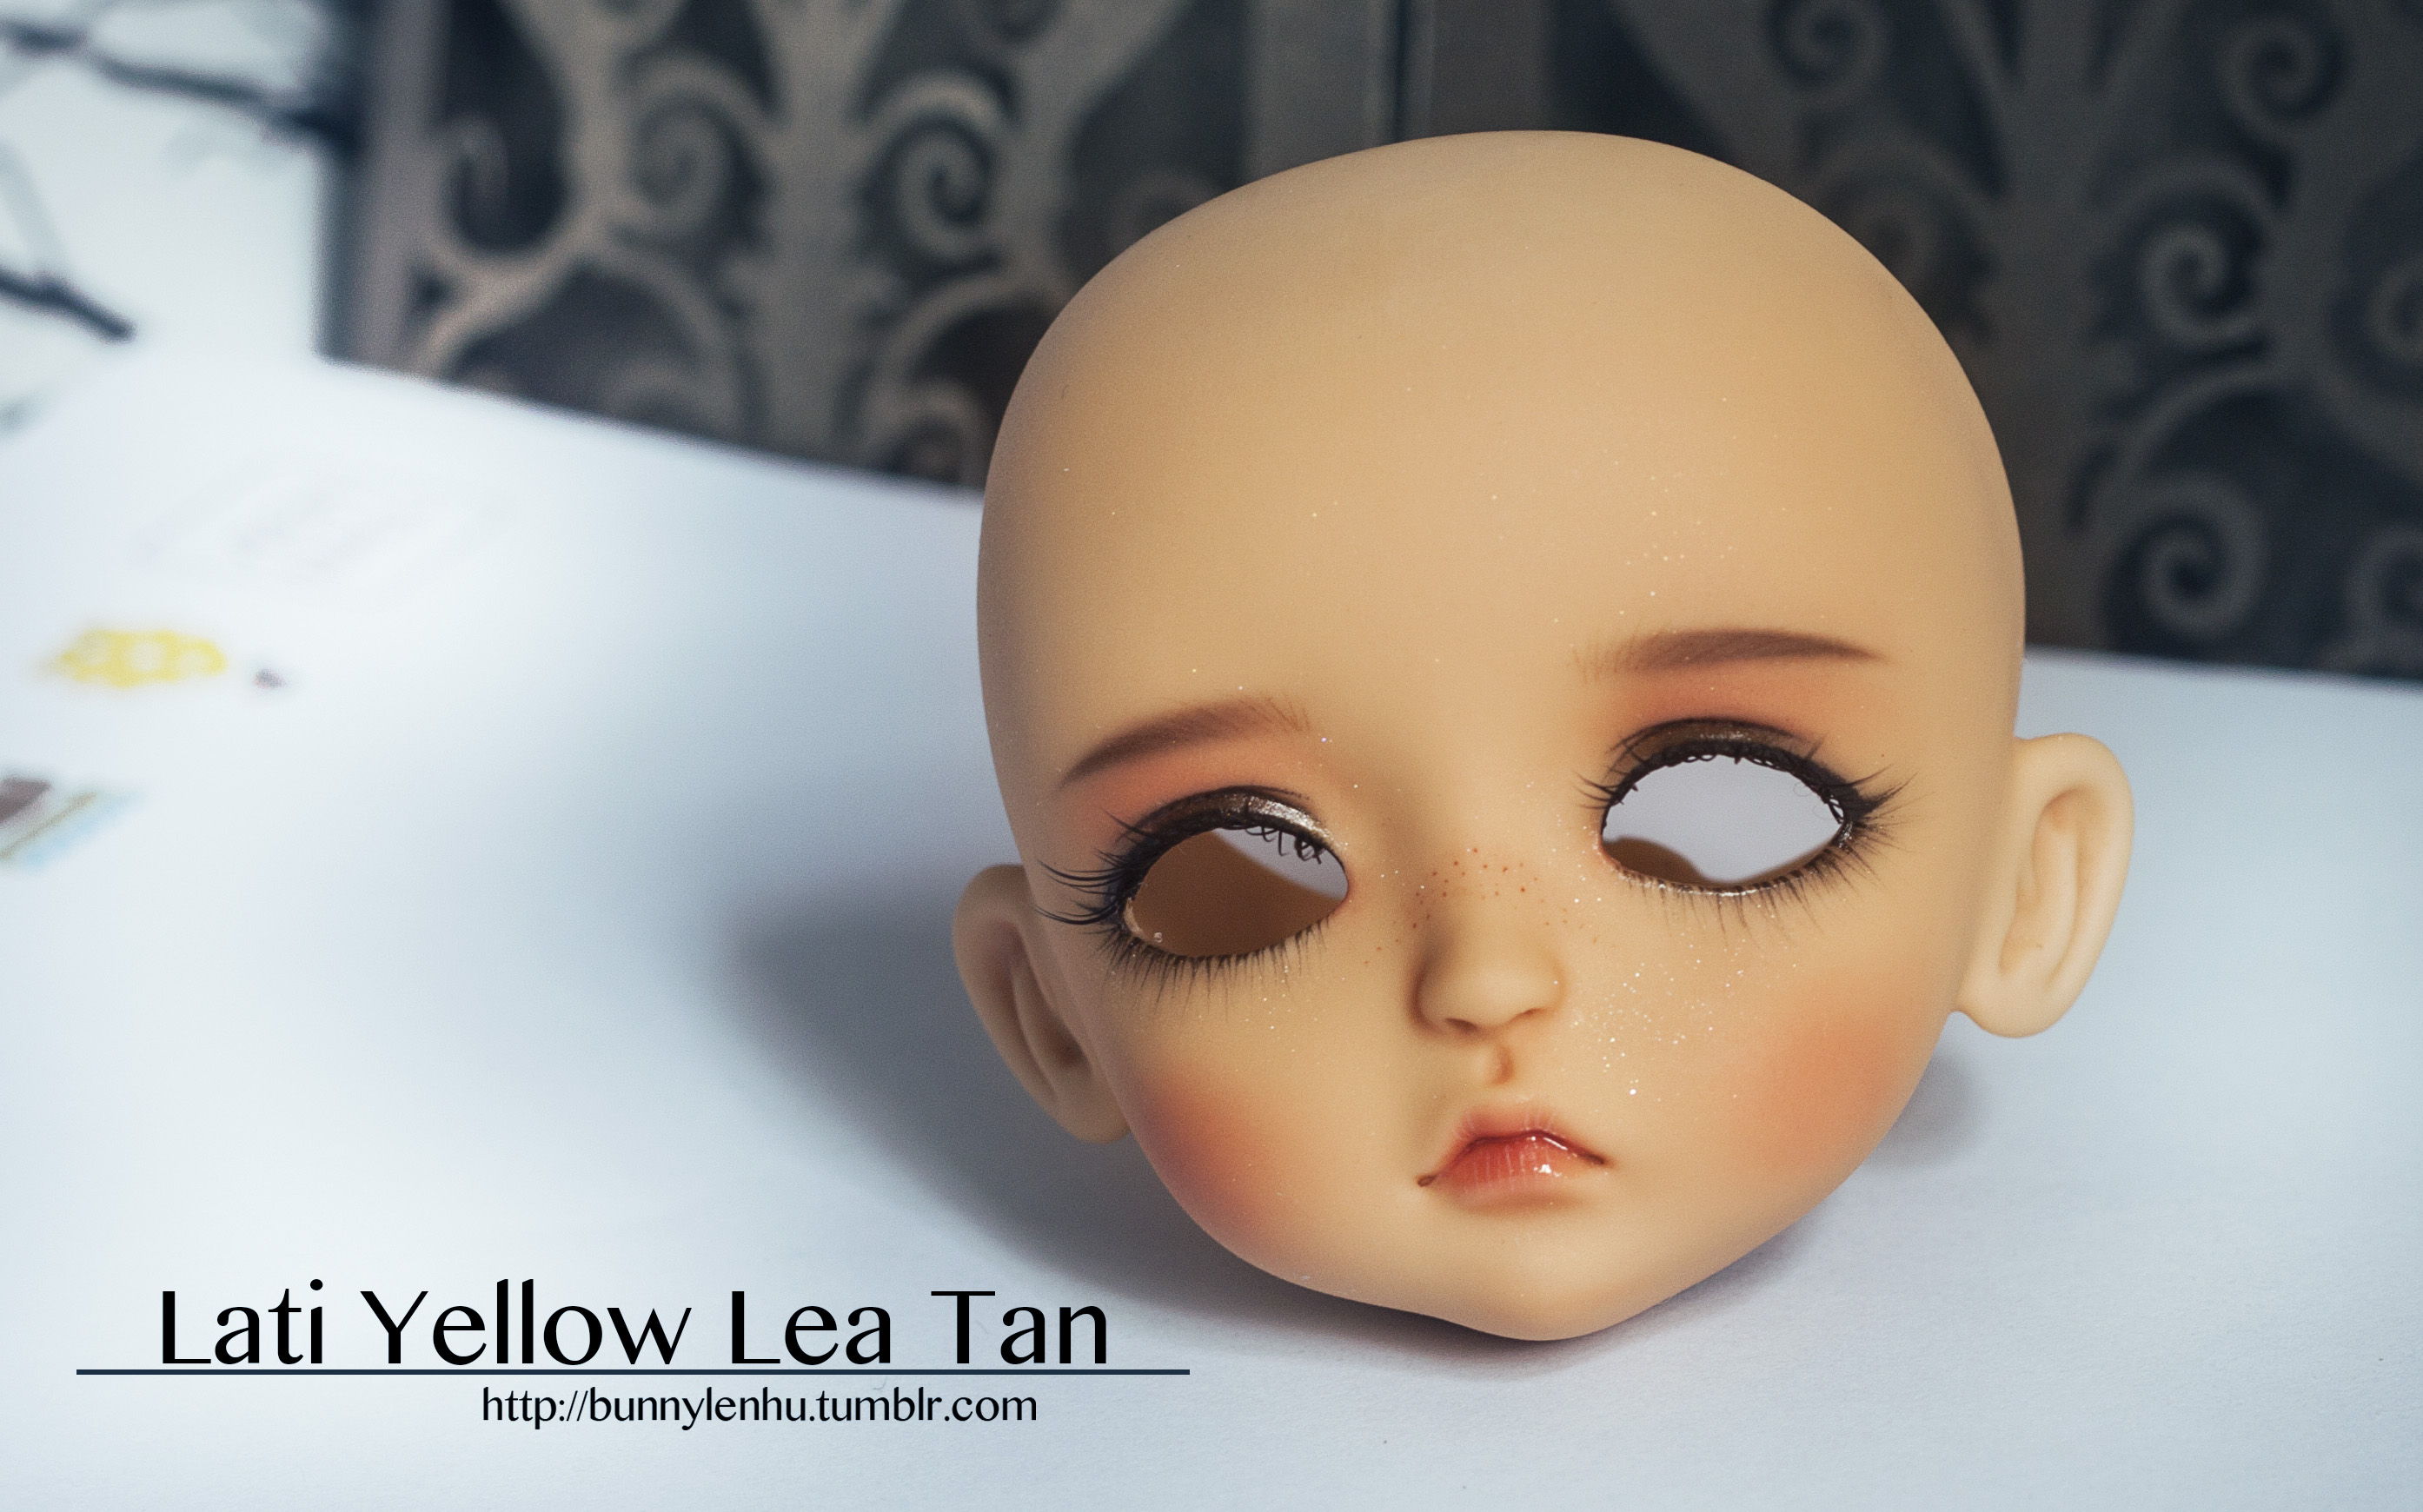 Latiyellow <b>Lea Tan</b> 02 - latiyellow-lea-tan-02